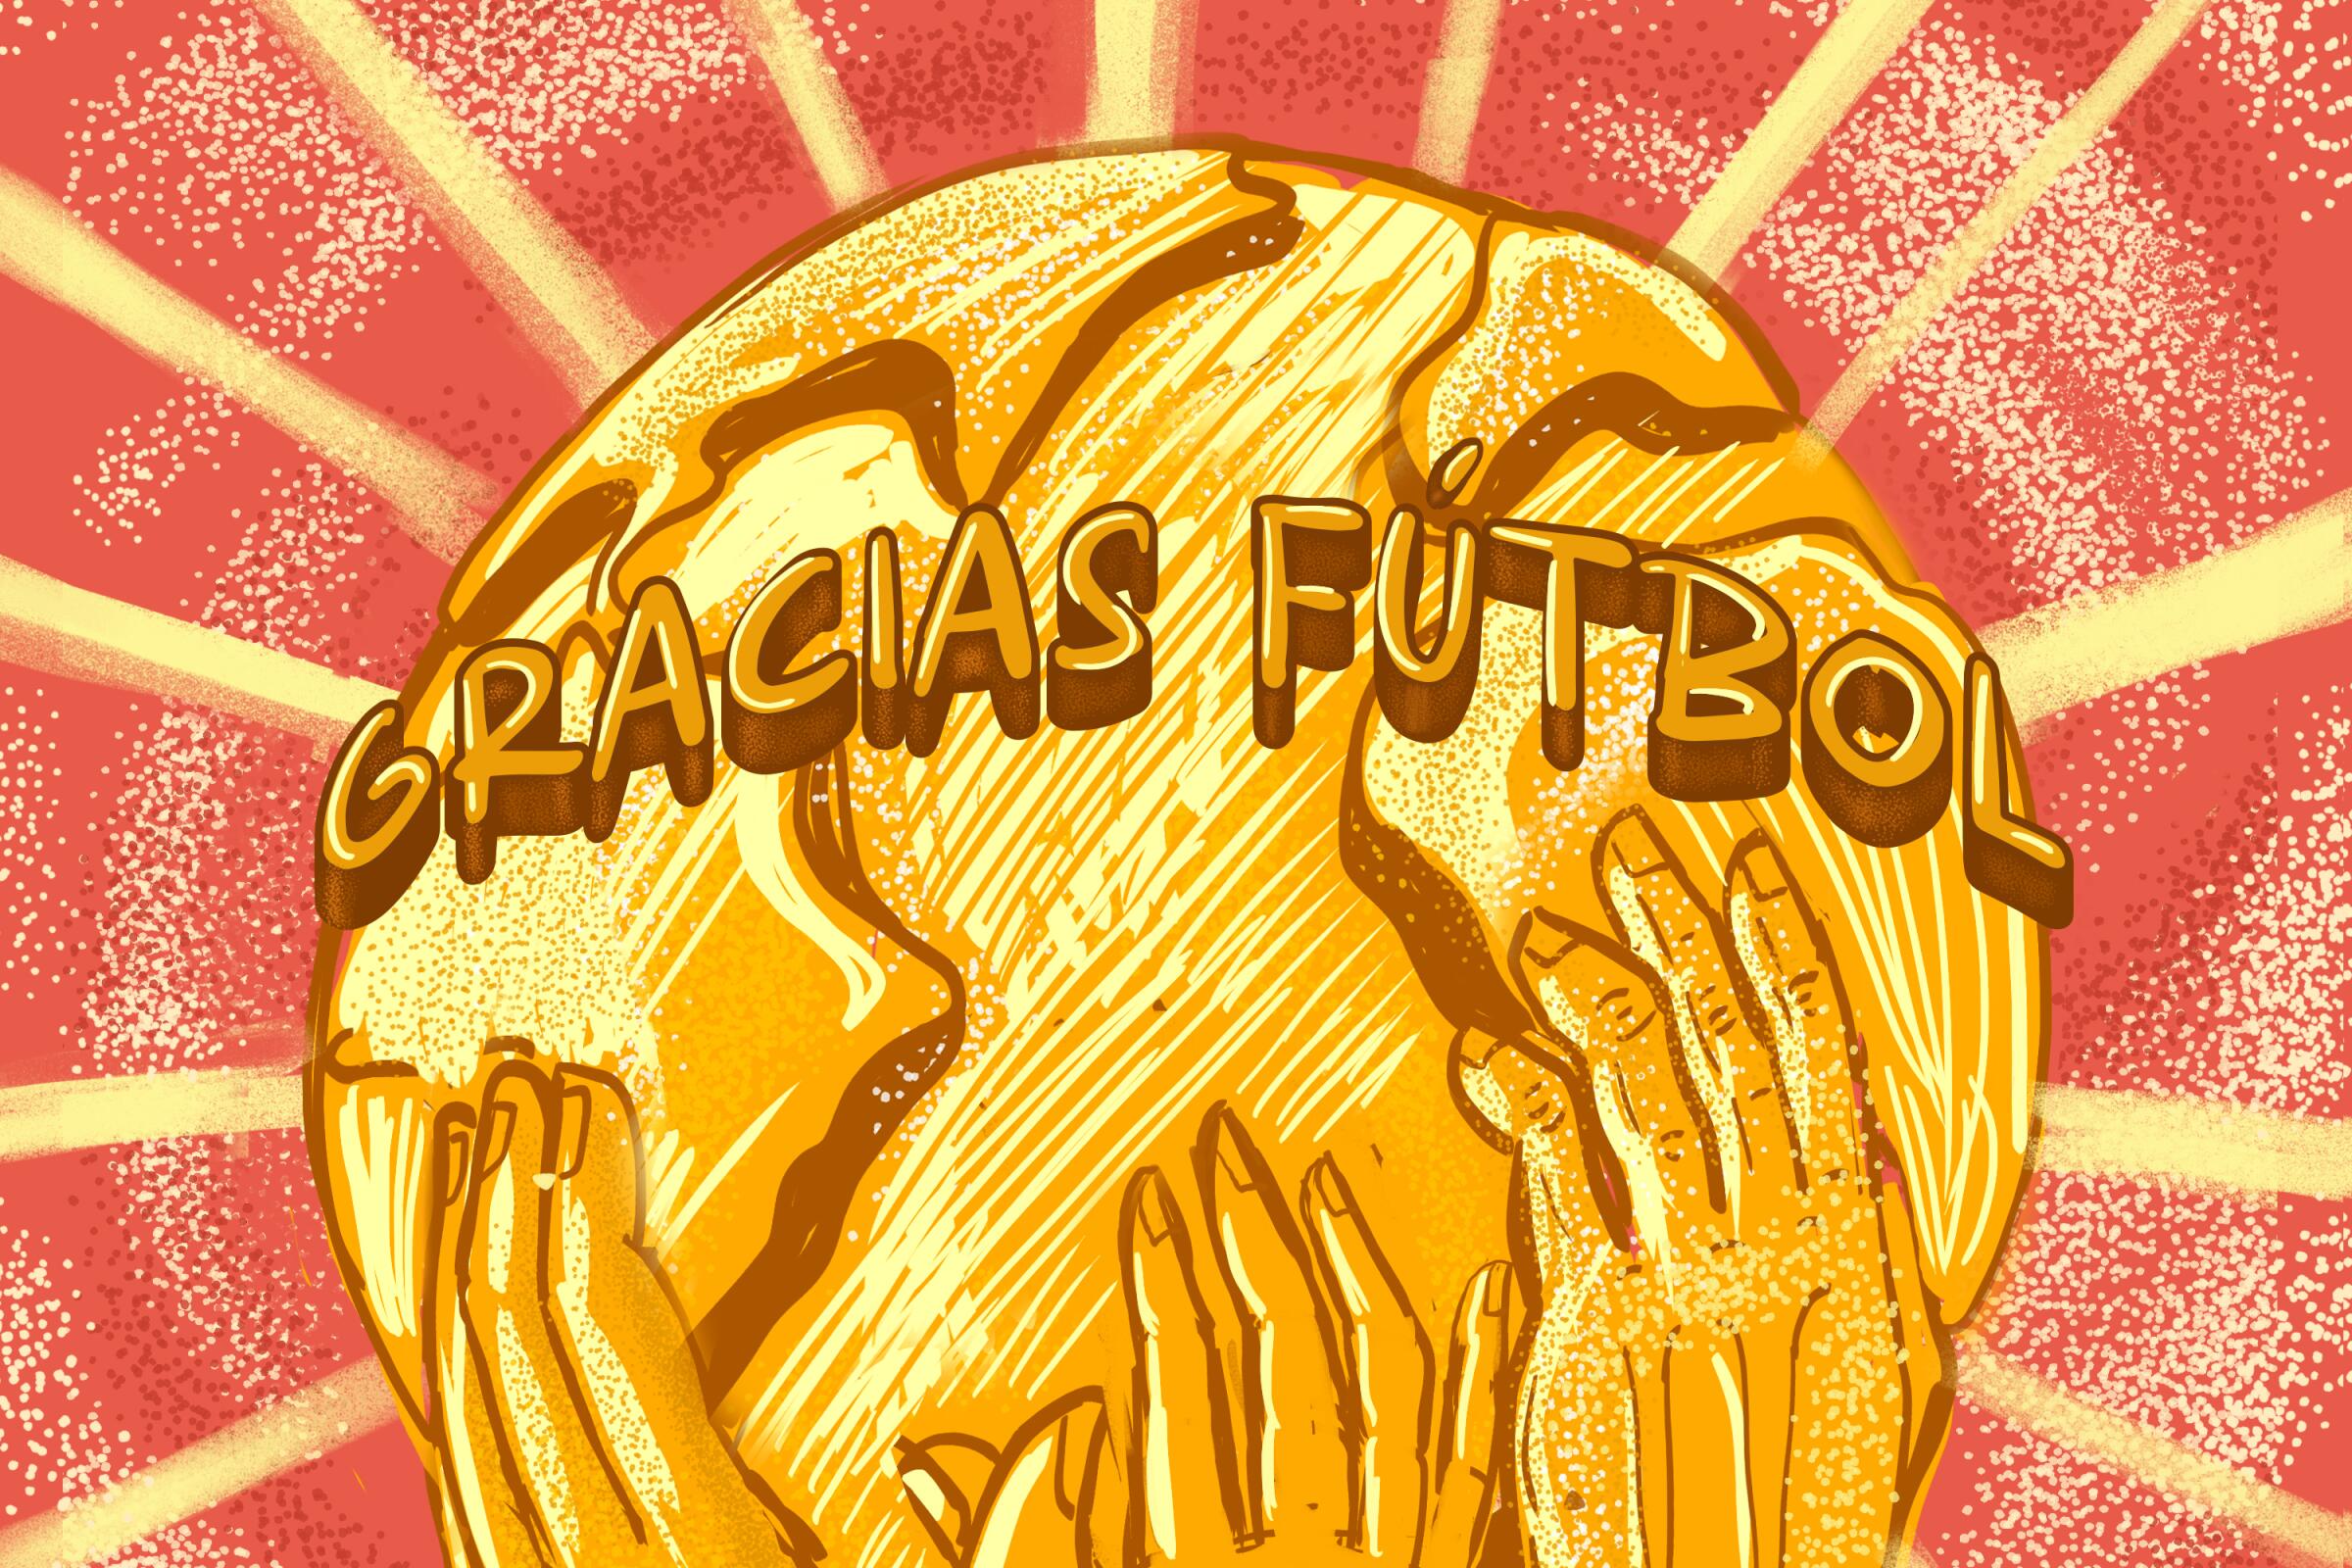 "Gracias Futbol" on a wold cup trophy shaped like a globe